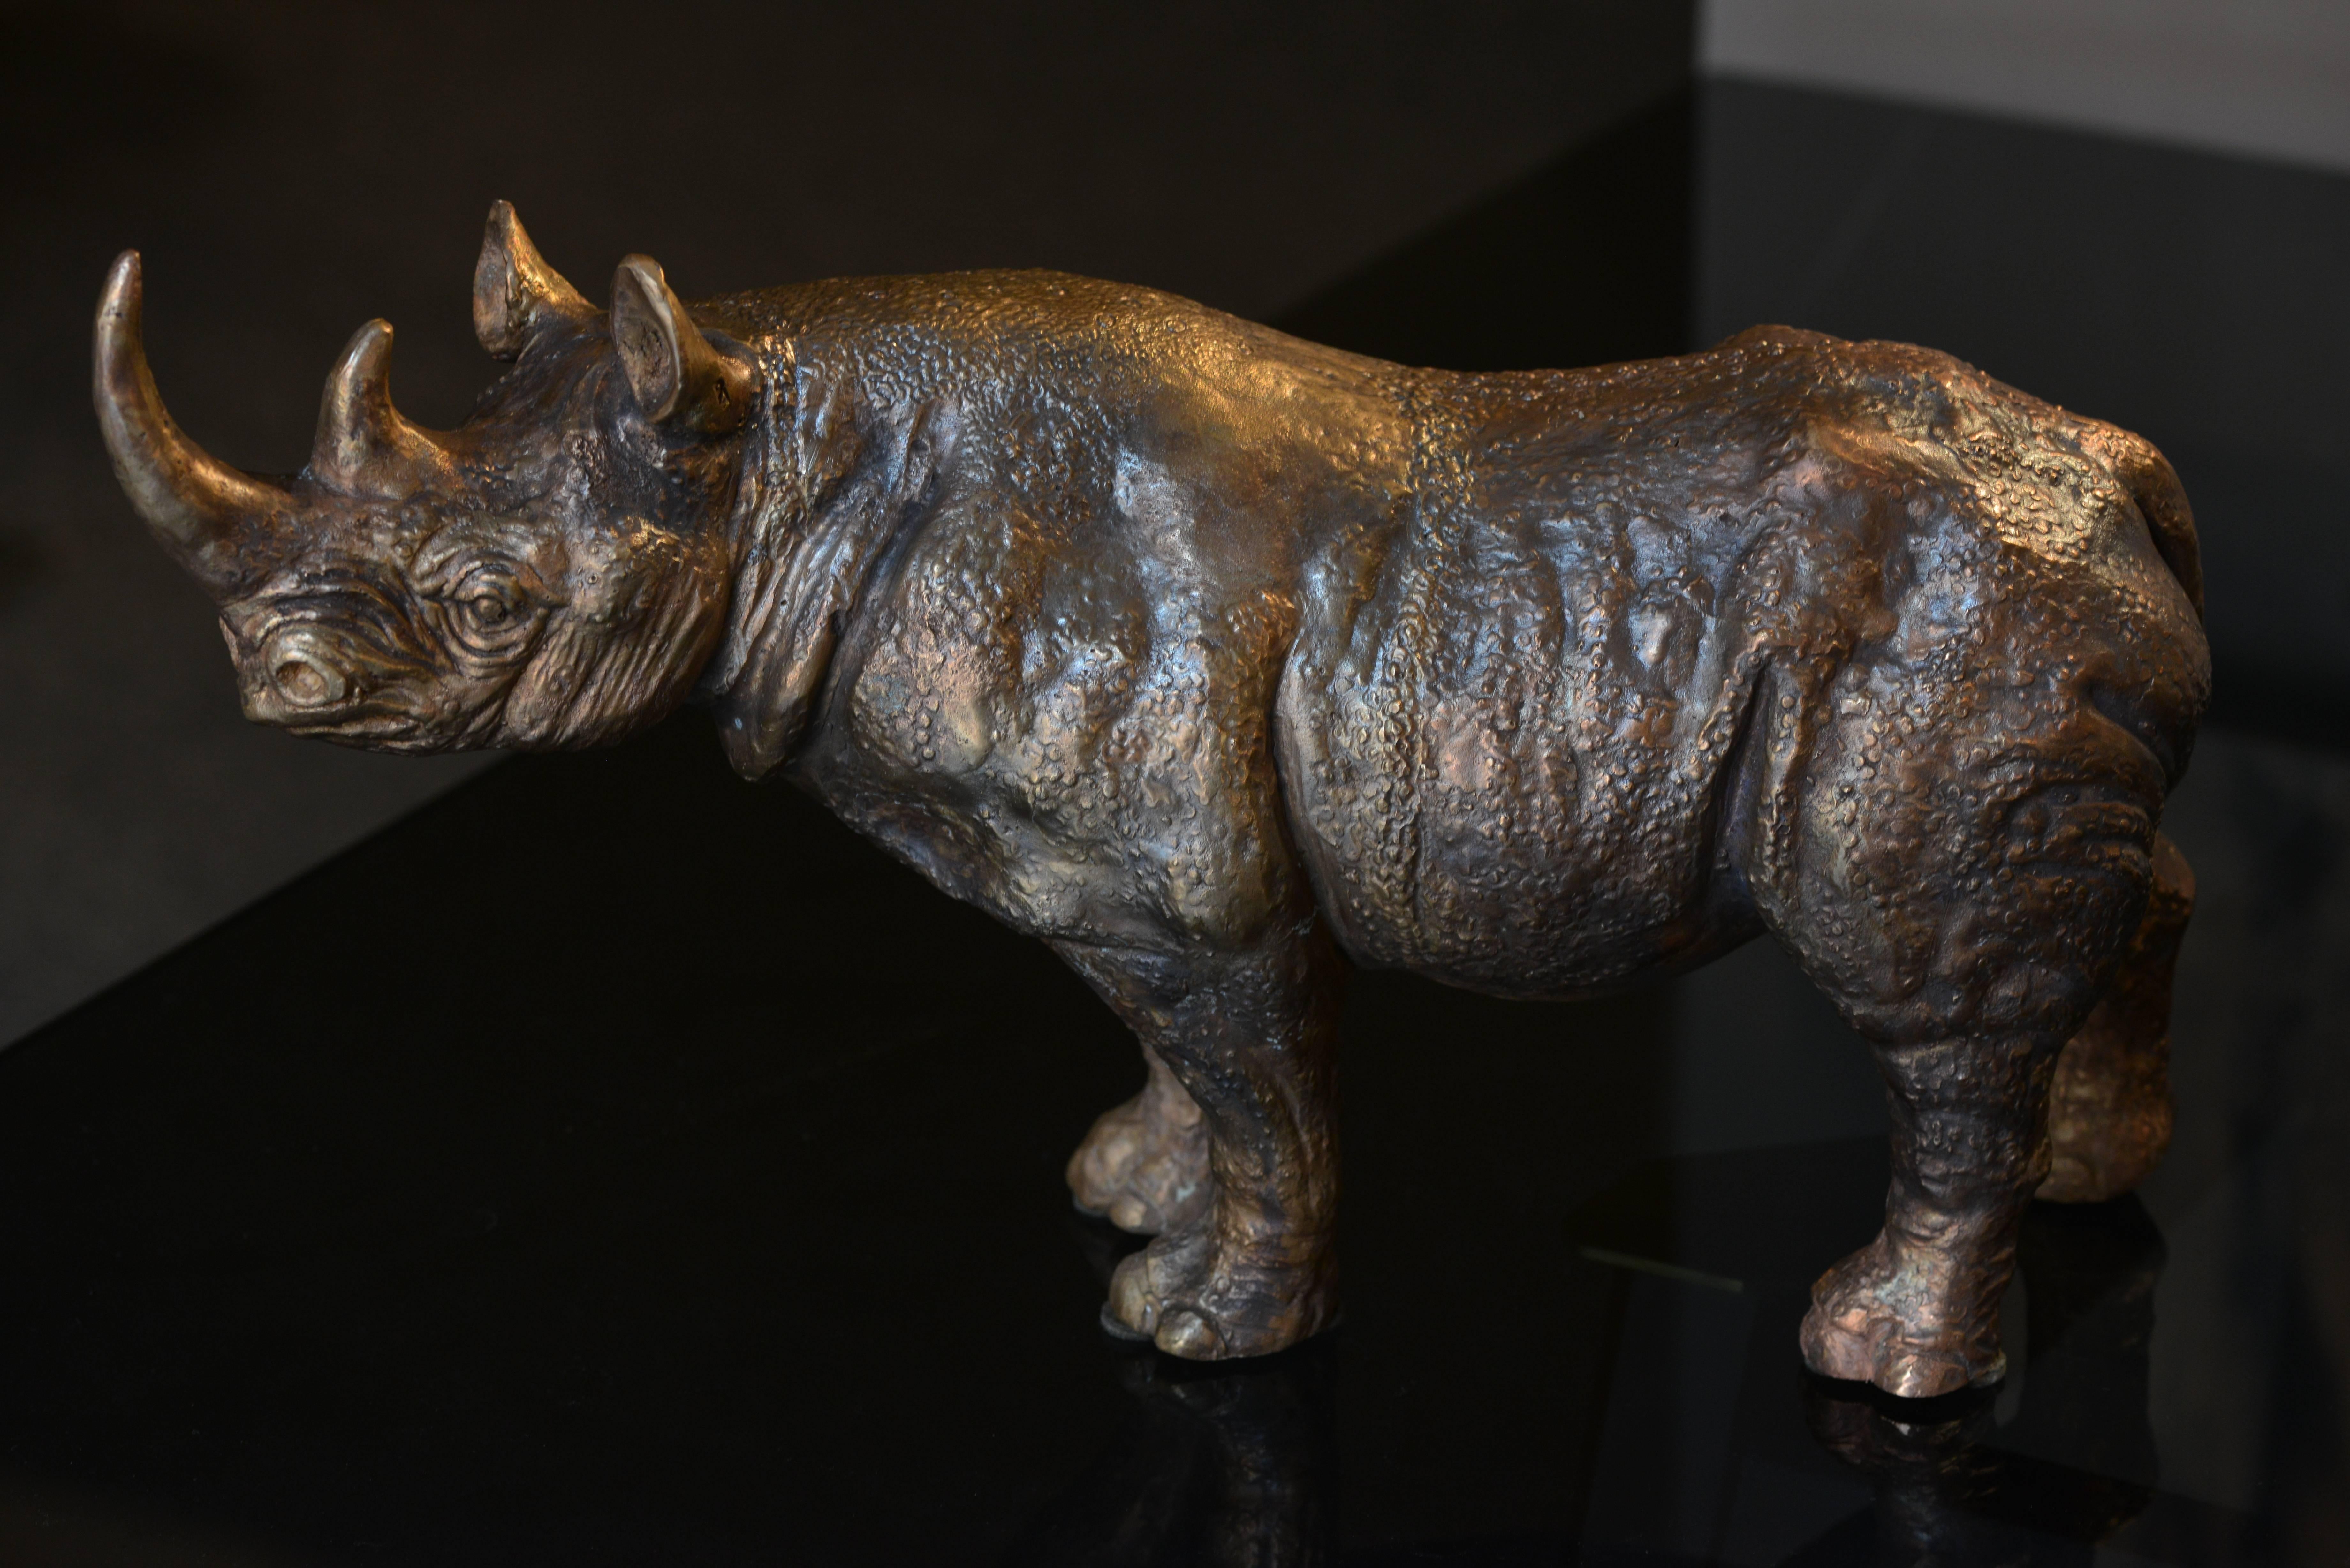 Pair of massive bronze rhinoceroses.